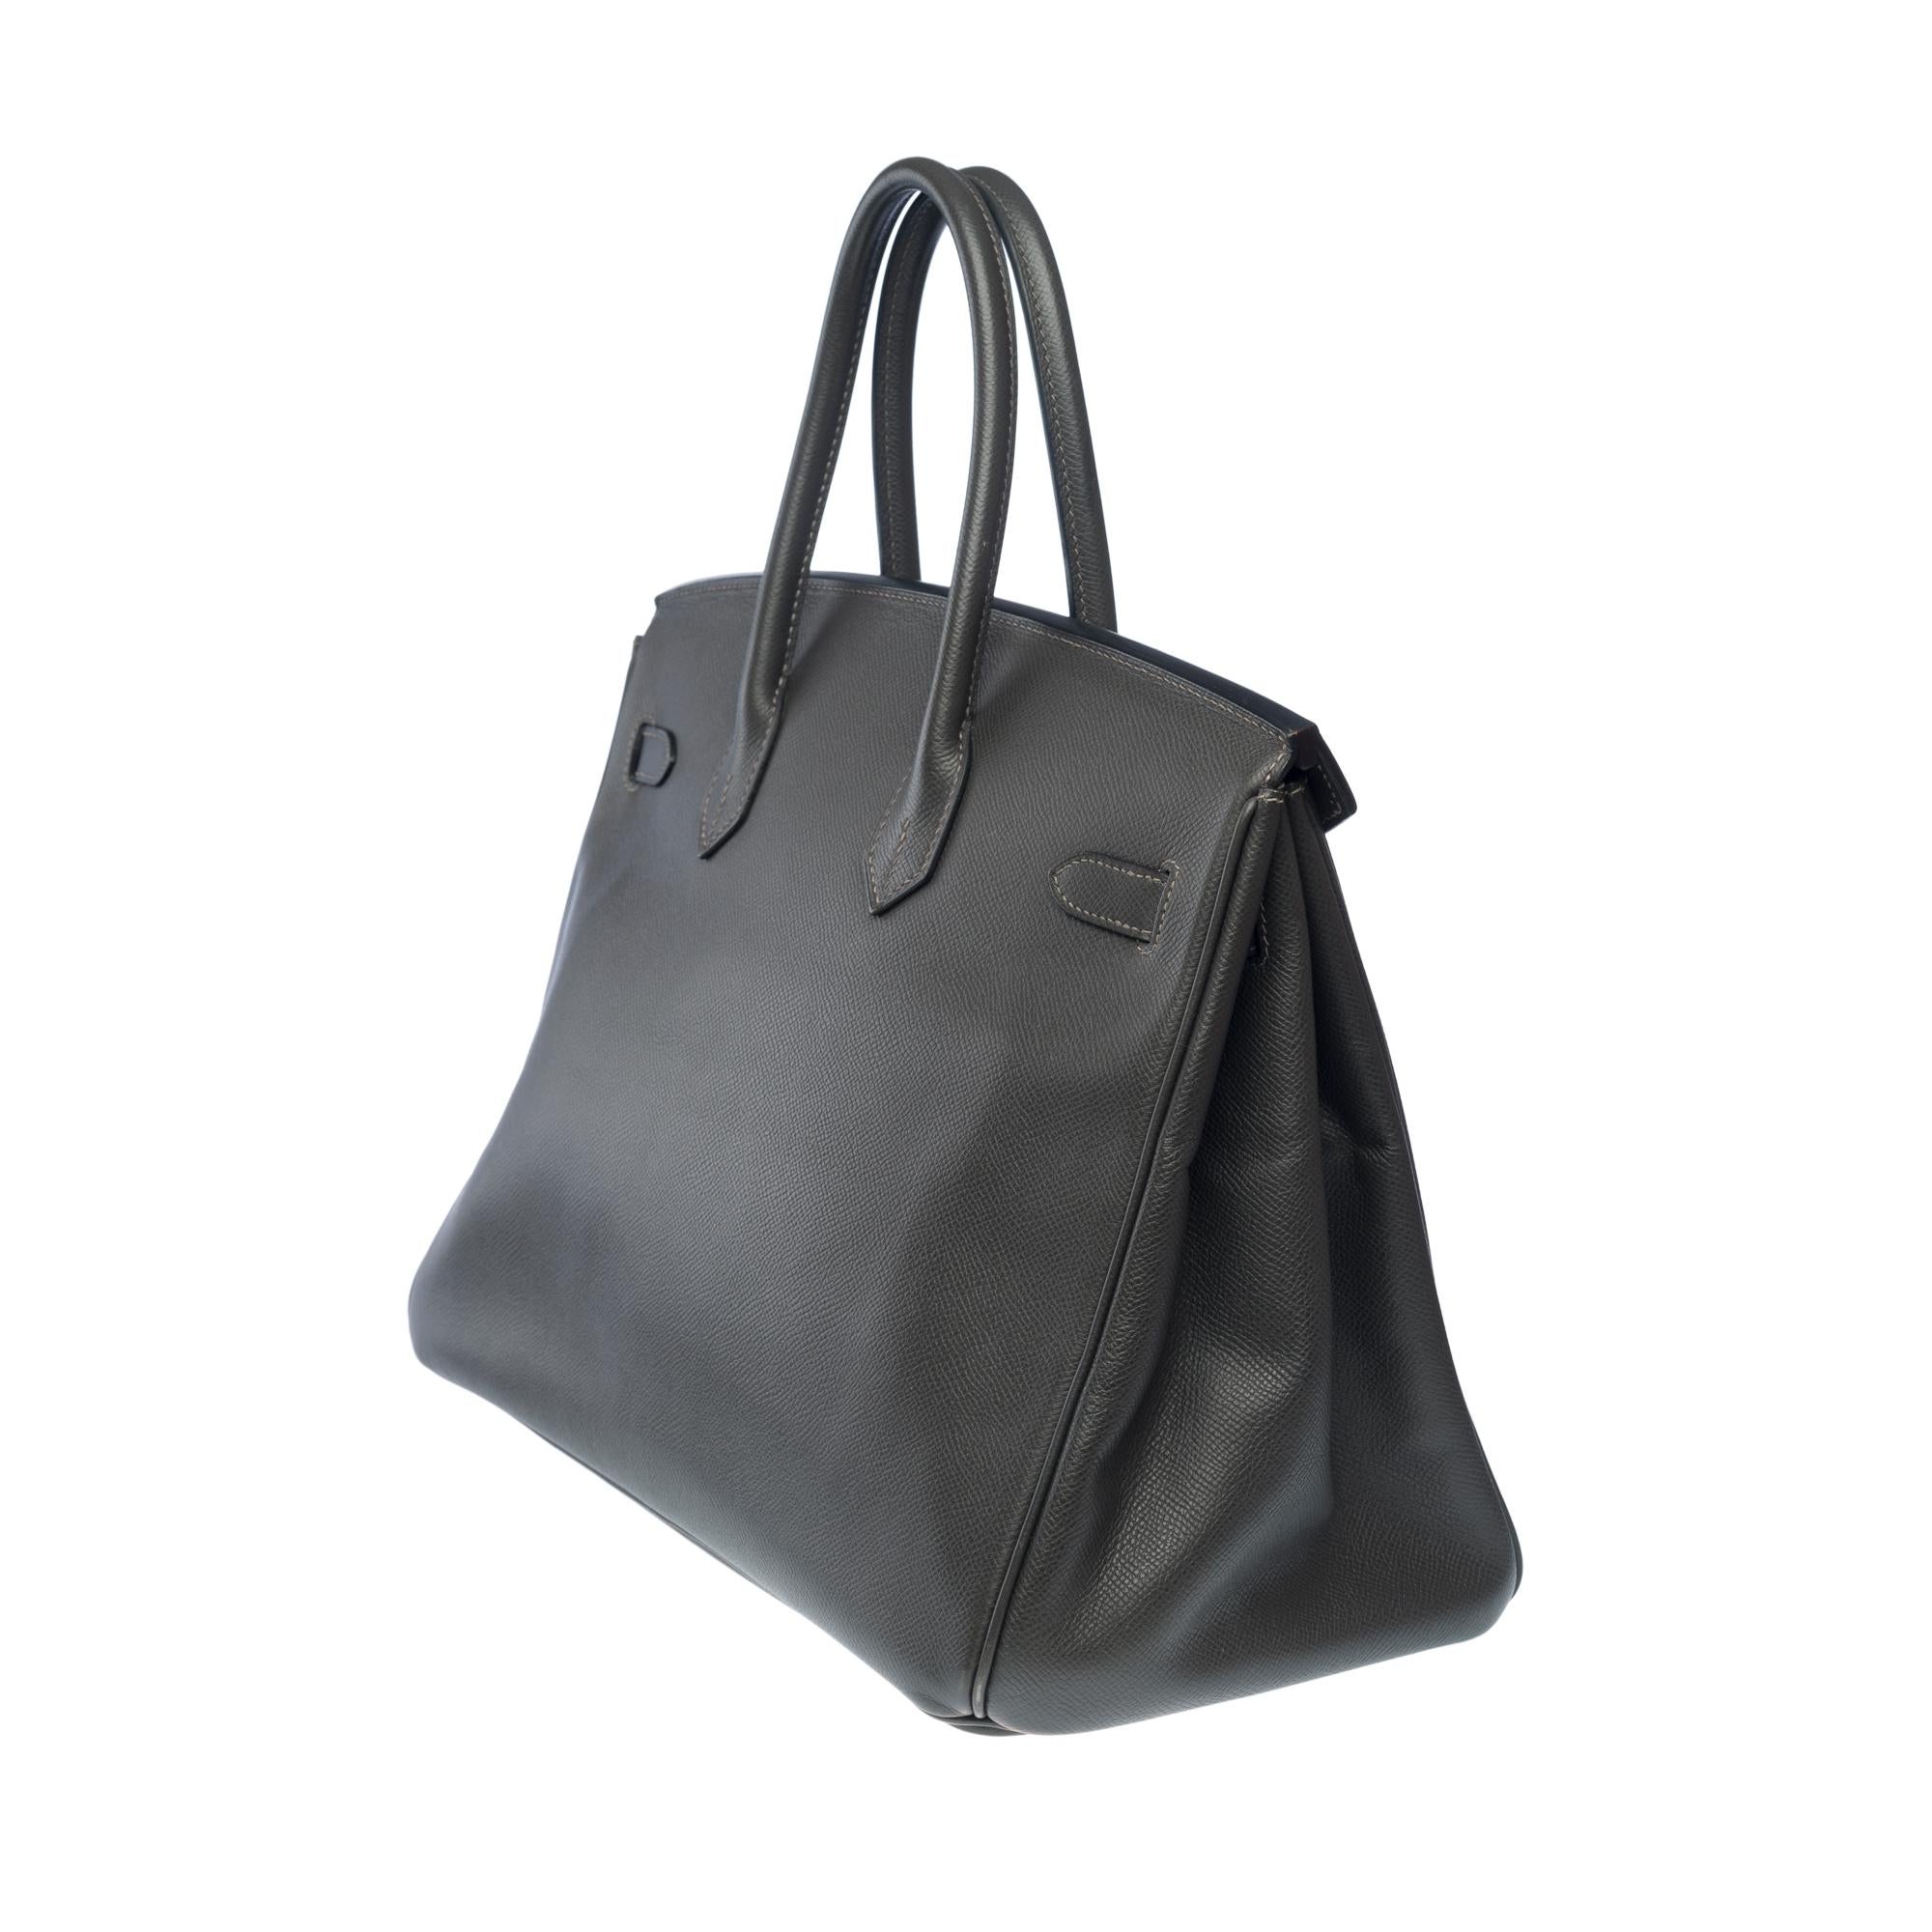 Amazing Hermès Birkin 35 handbag in Gray Graphite Epsom leather, GHW For Sale 2